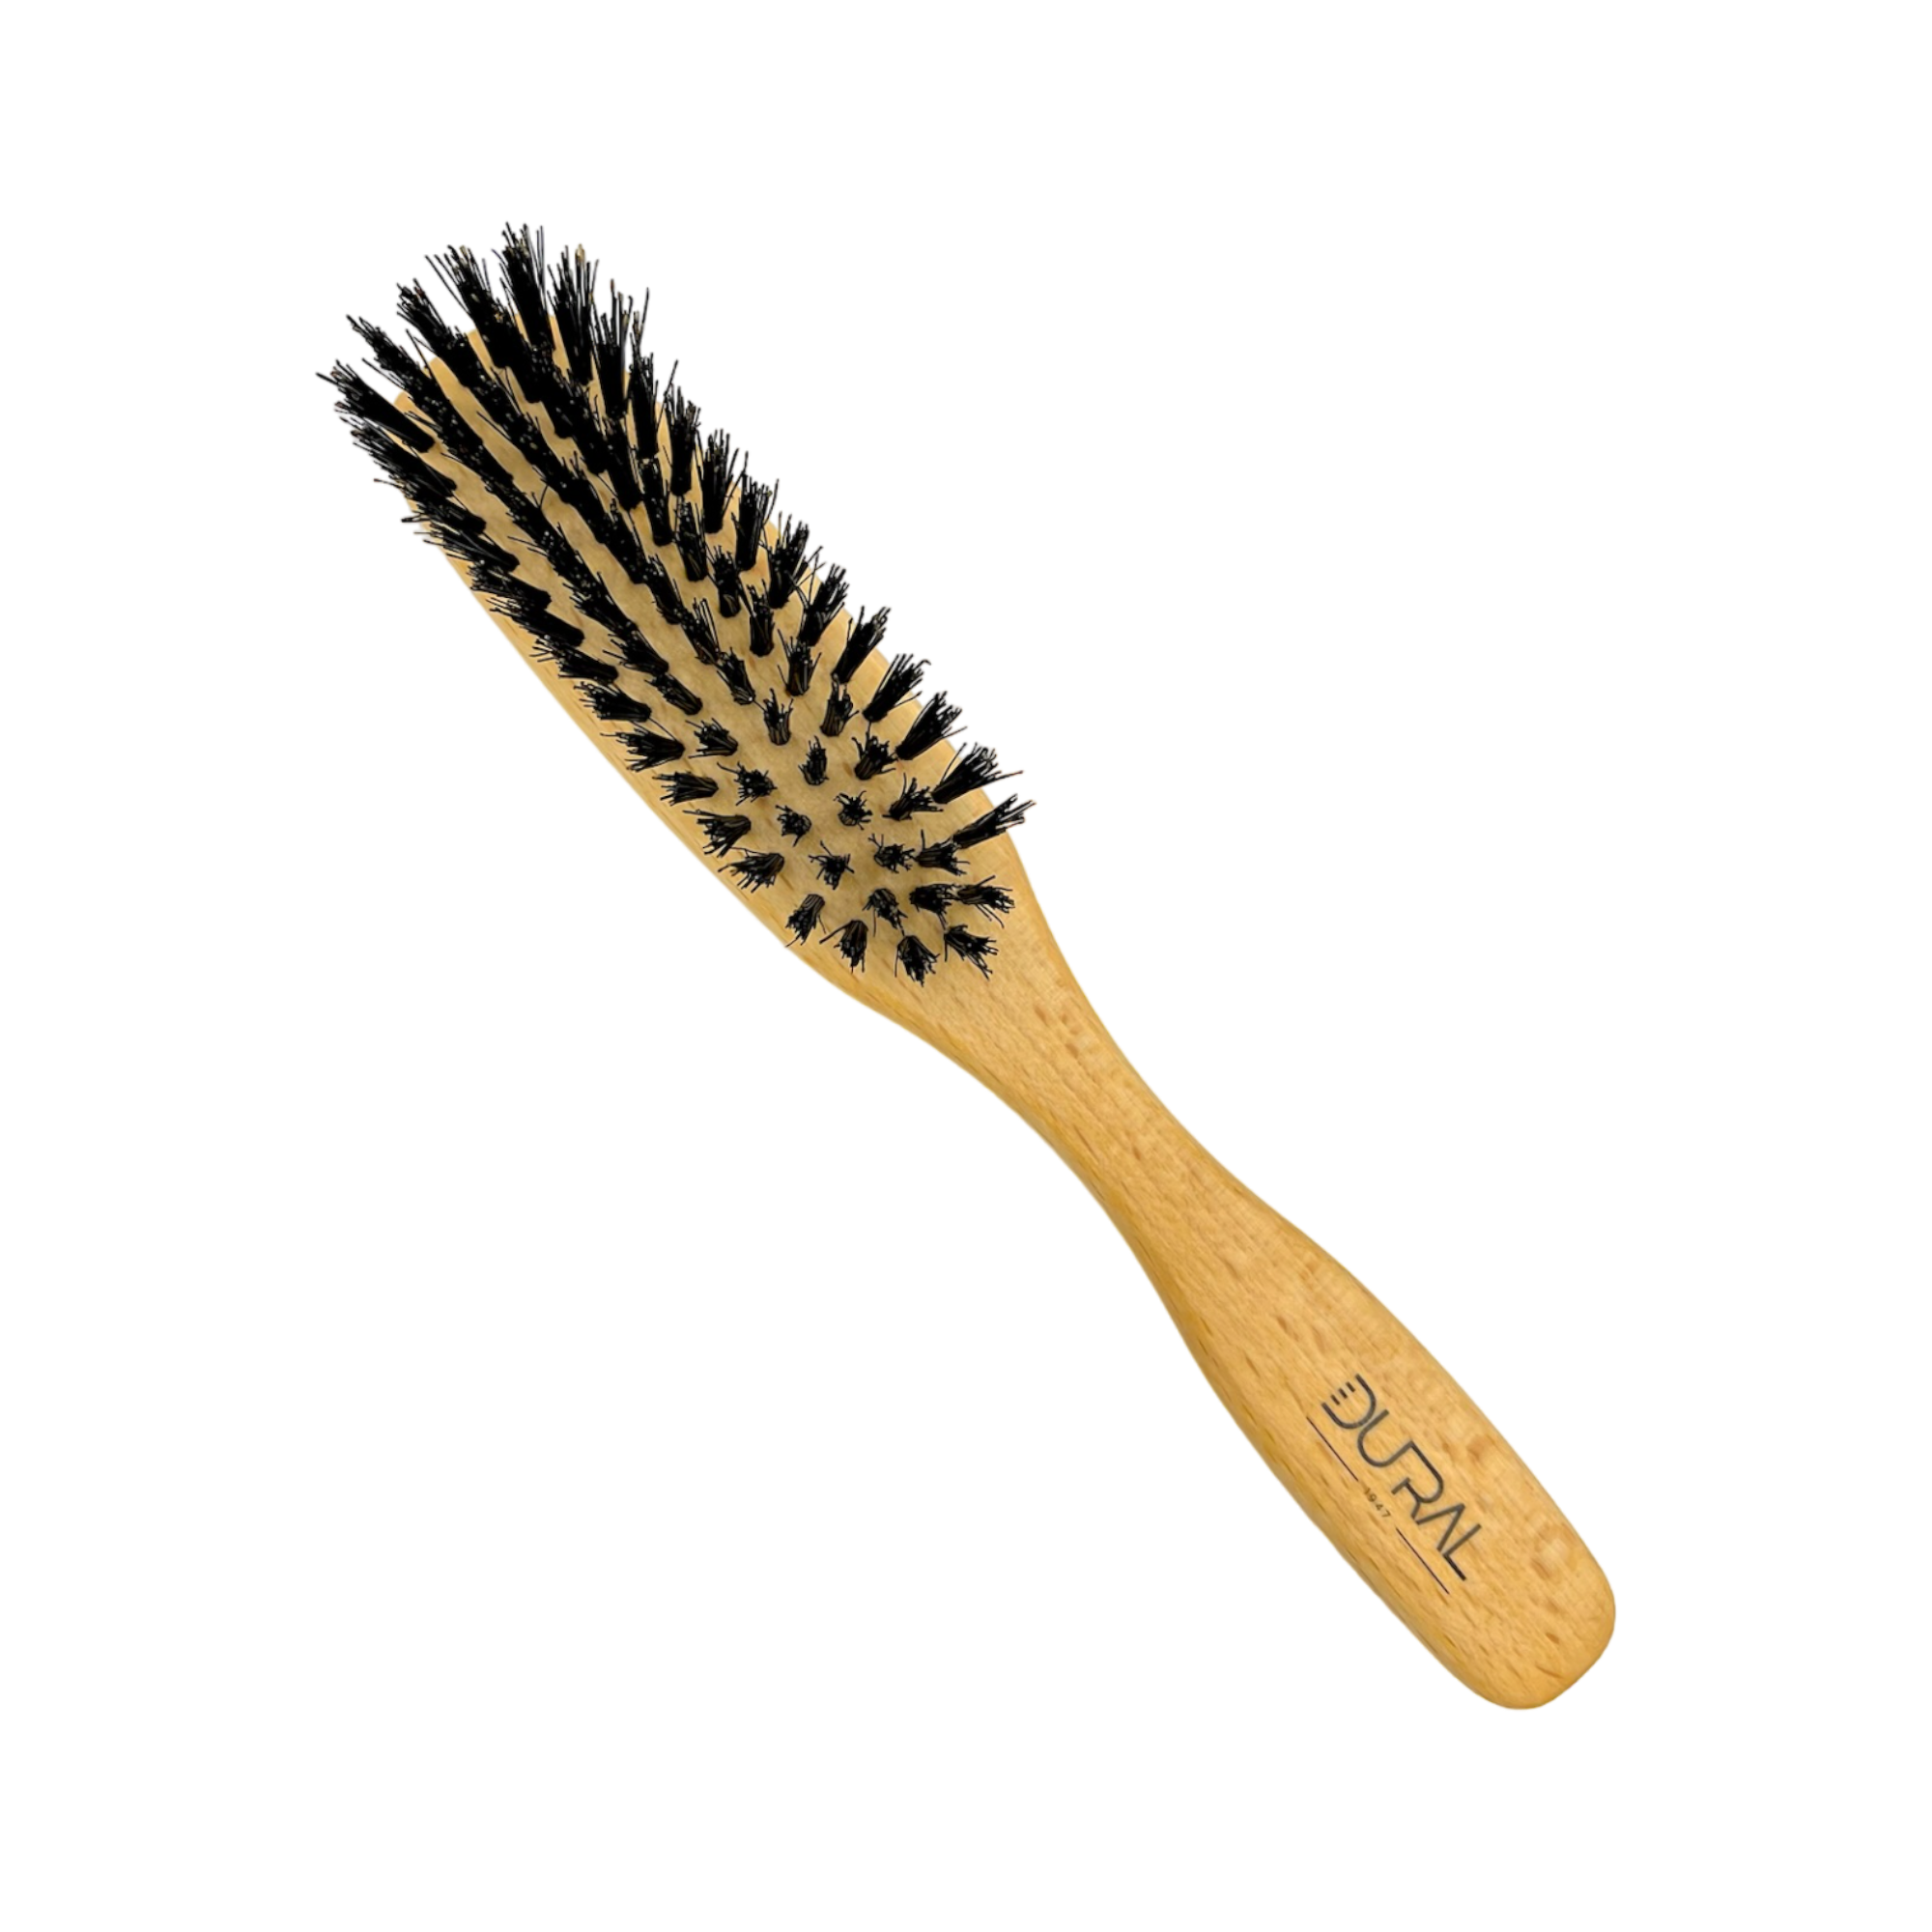 Dural Beech wood hair brush with boar bristles - 5 rows